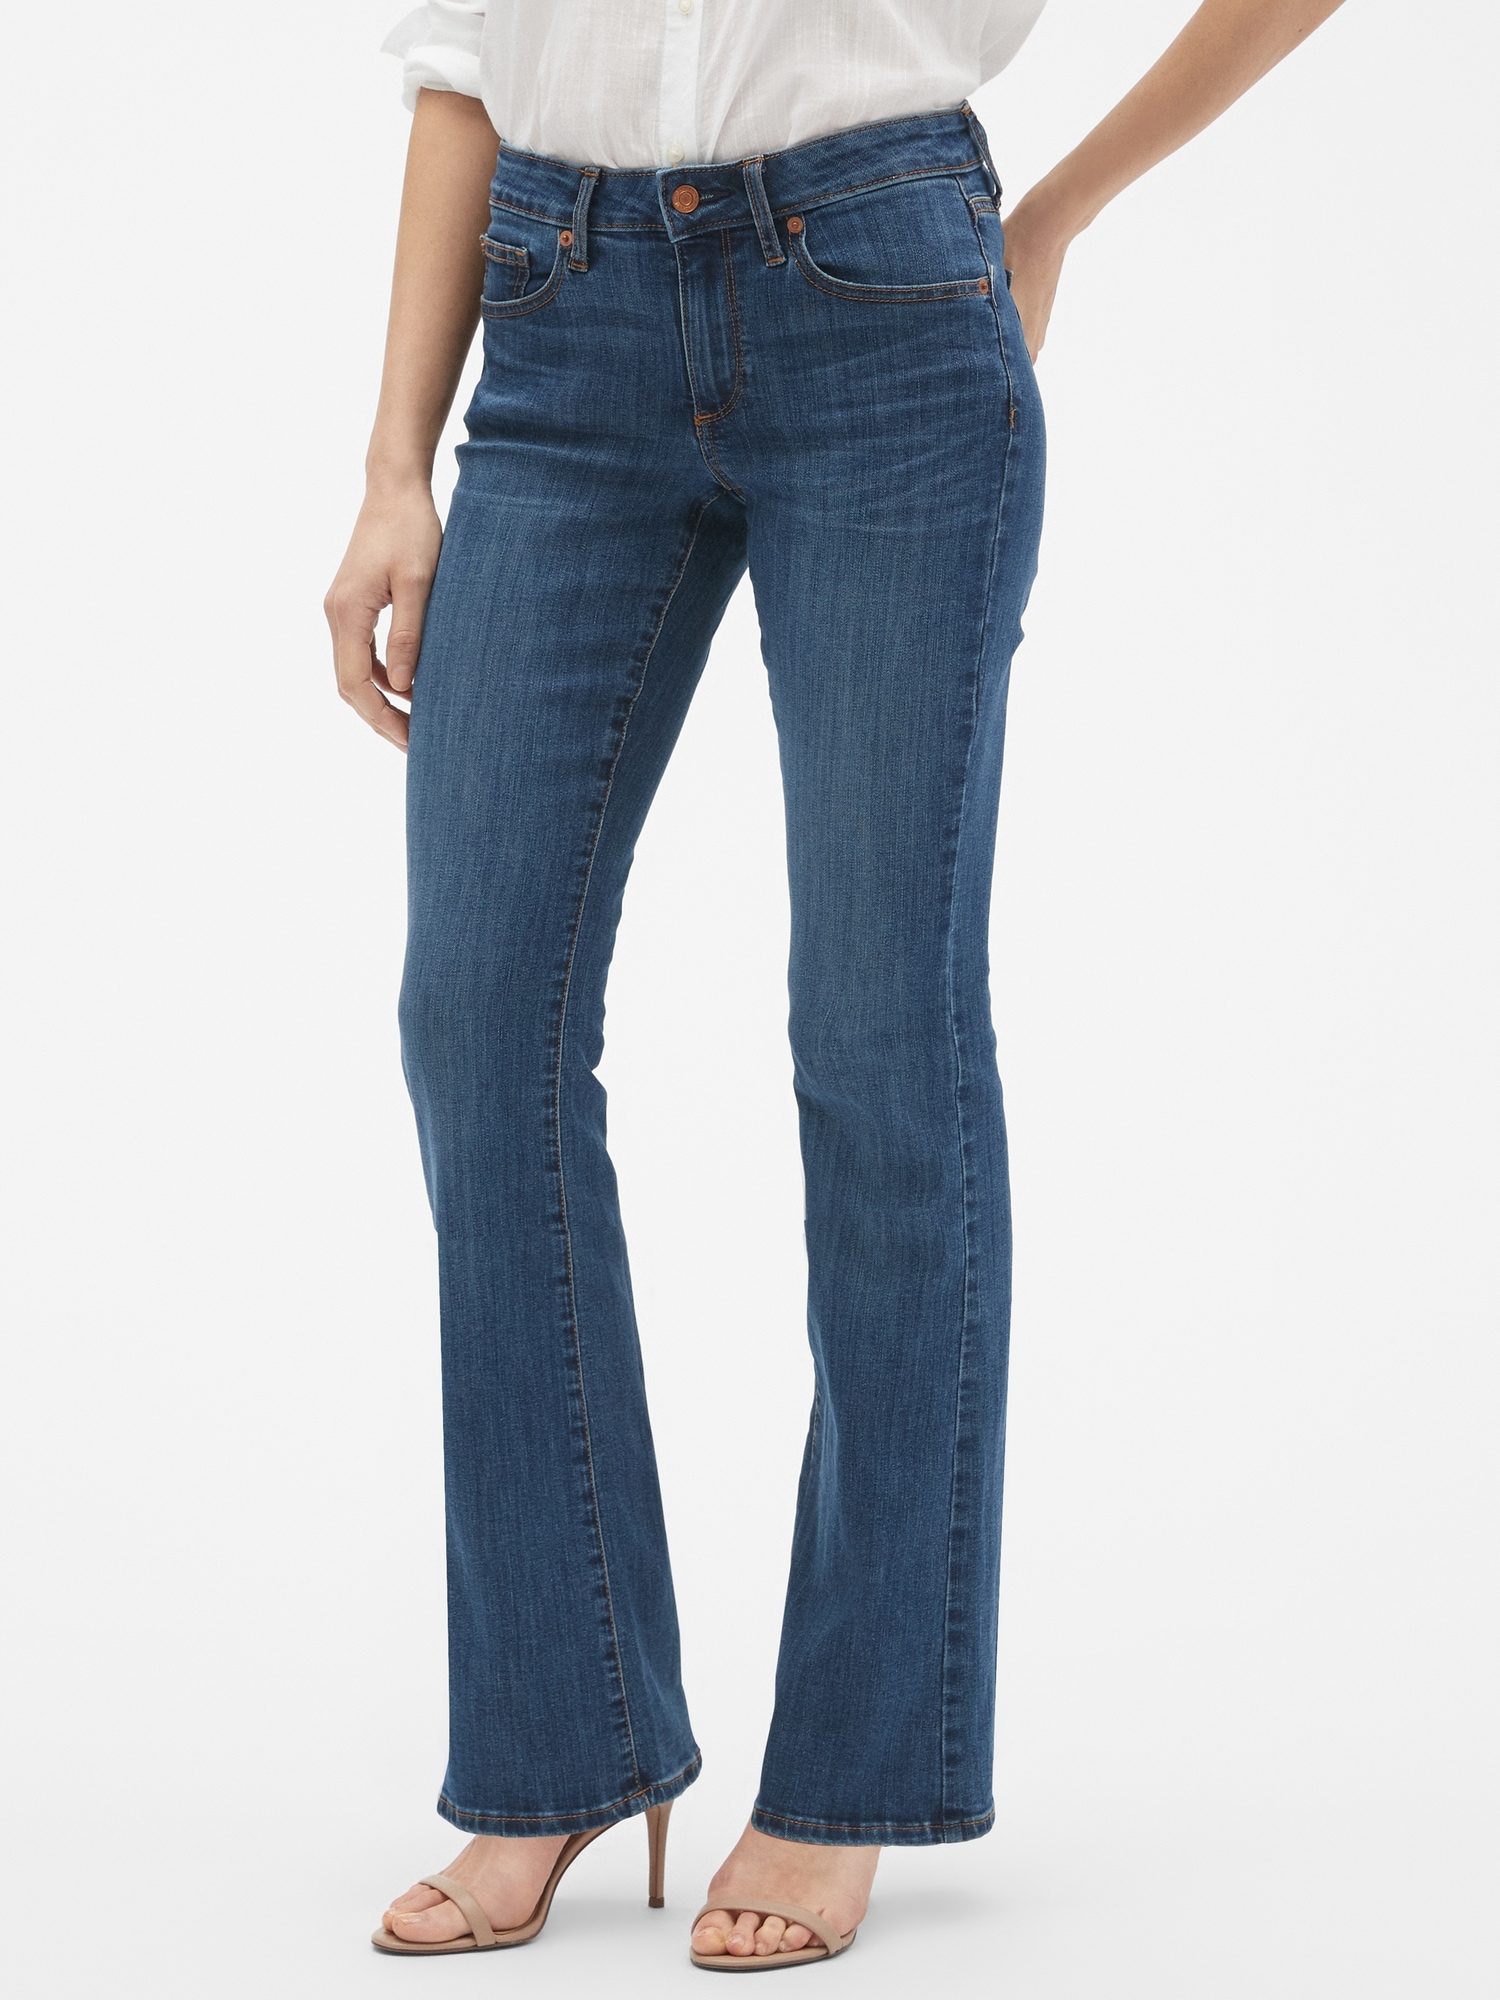 gap bootleg jeans